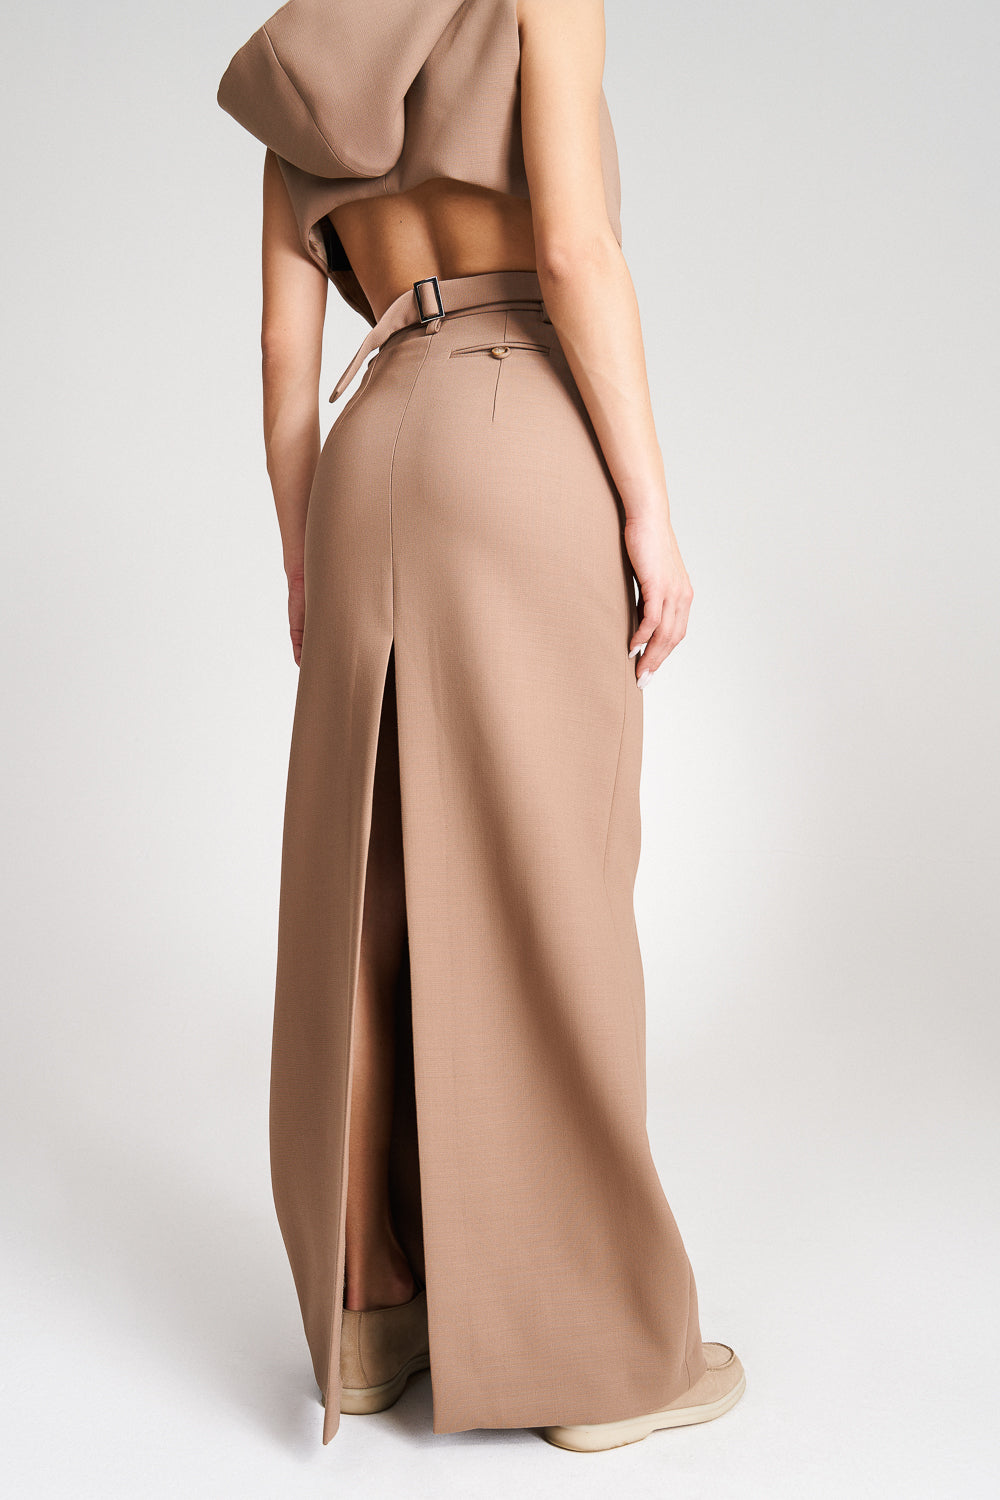 ’Noelle’ Beige High Waisted Tailored Maxi Skirt